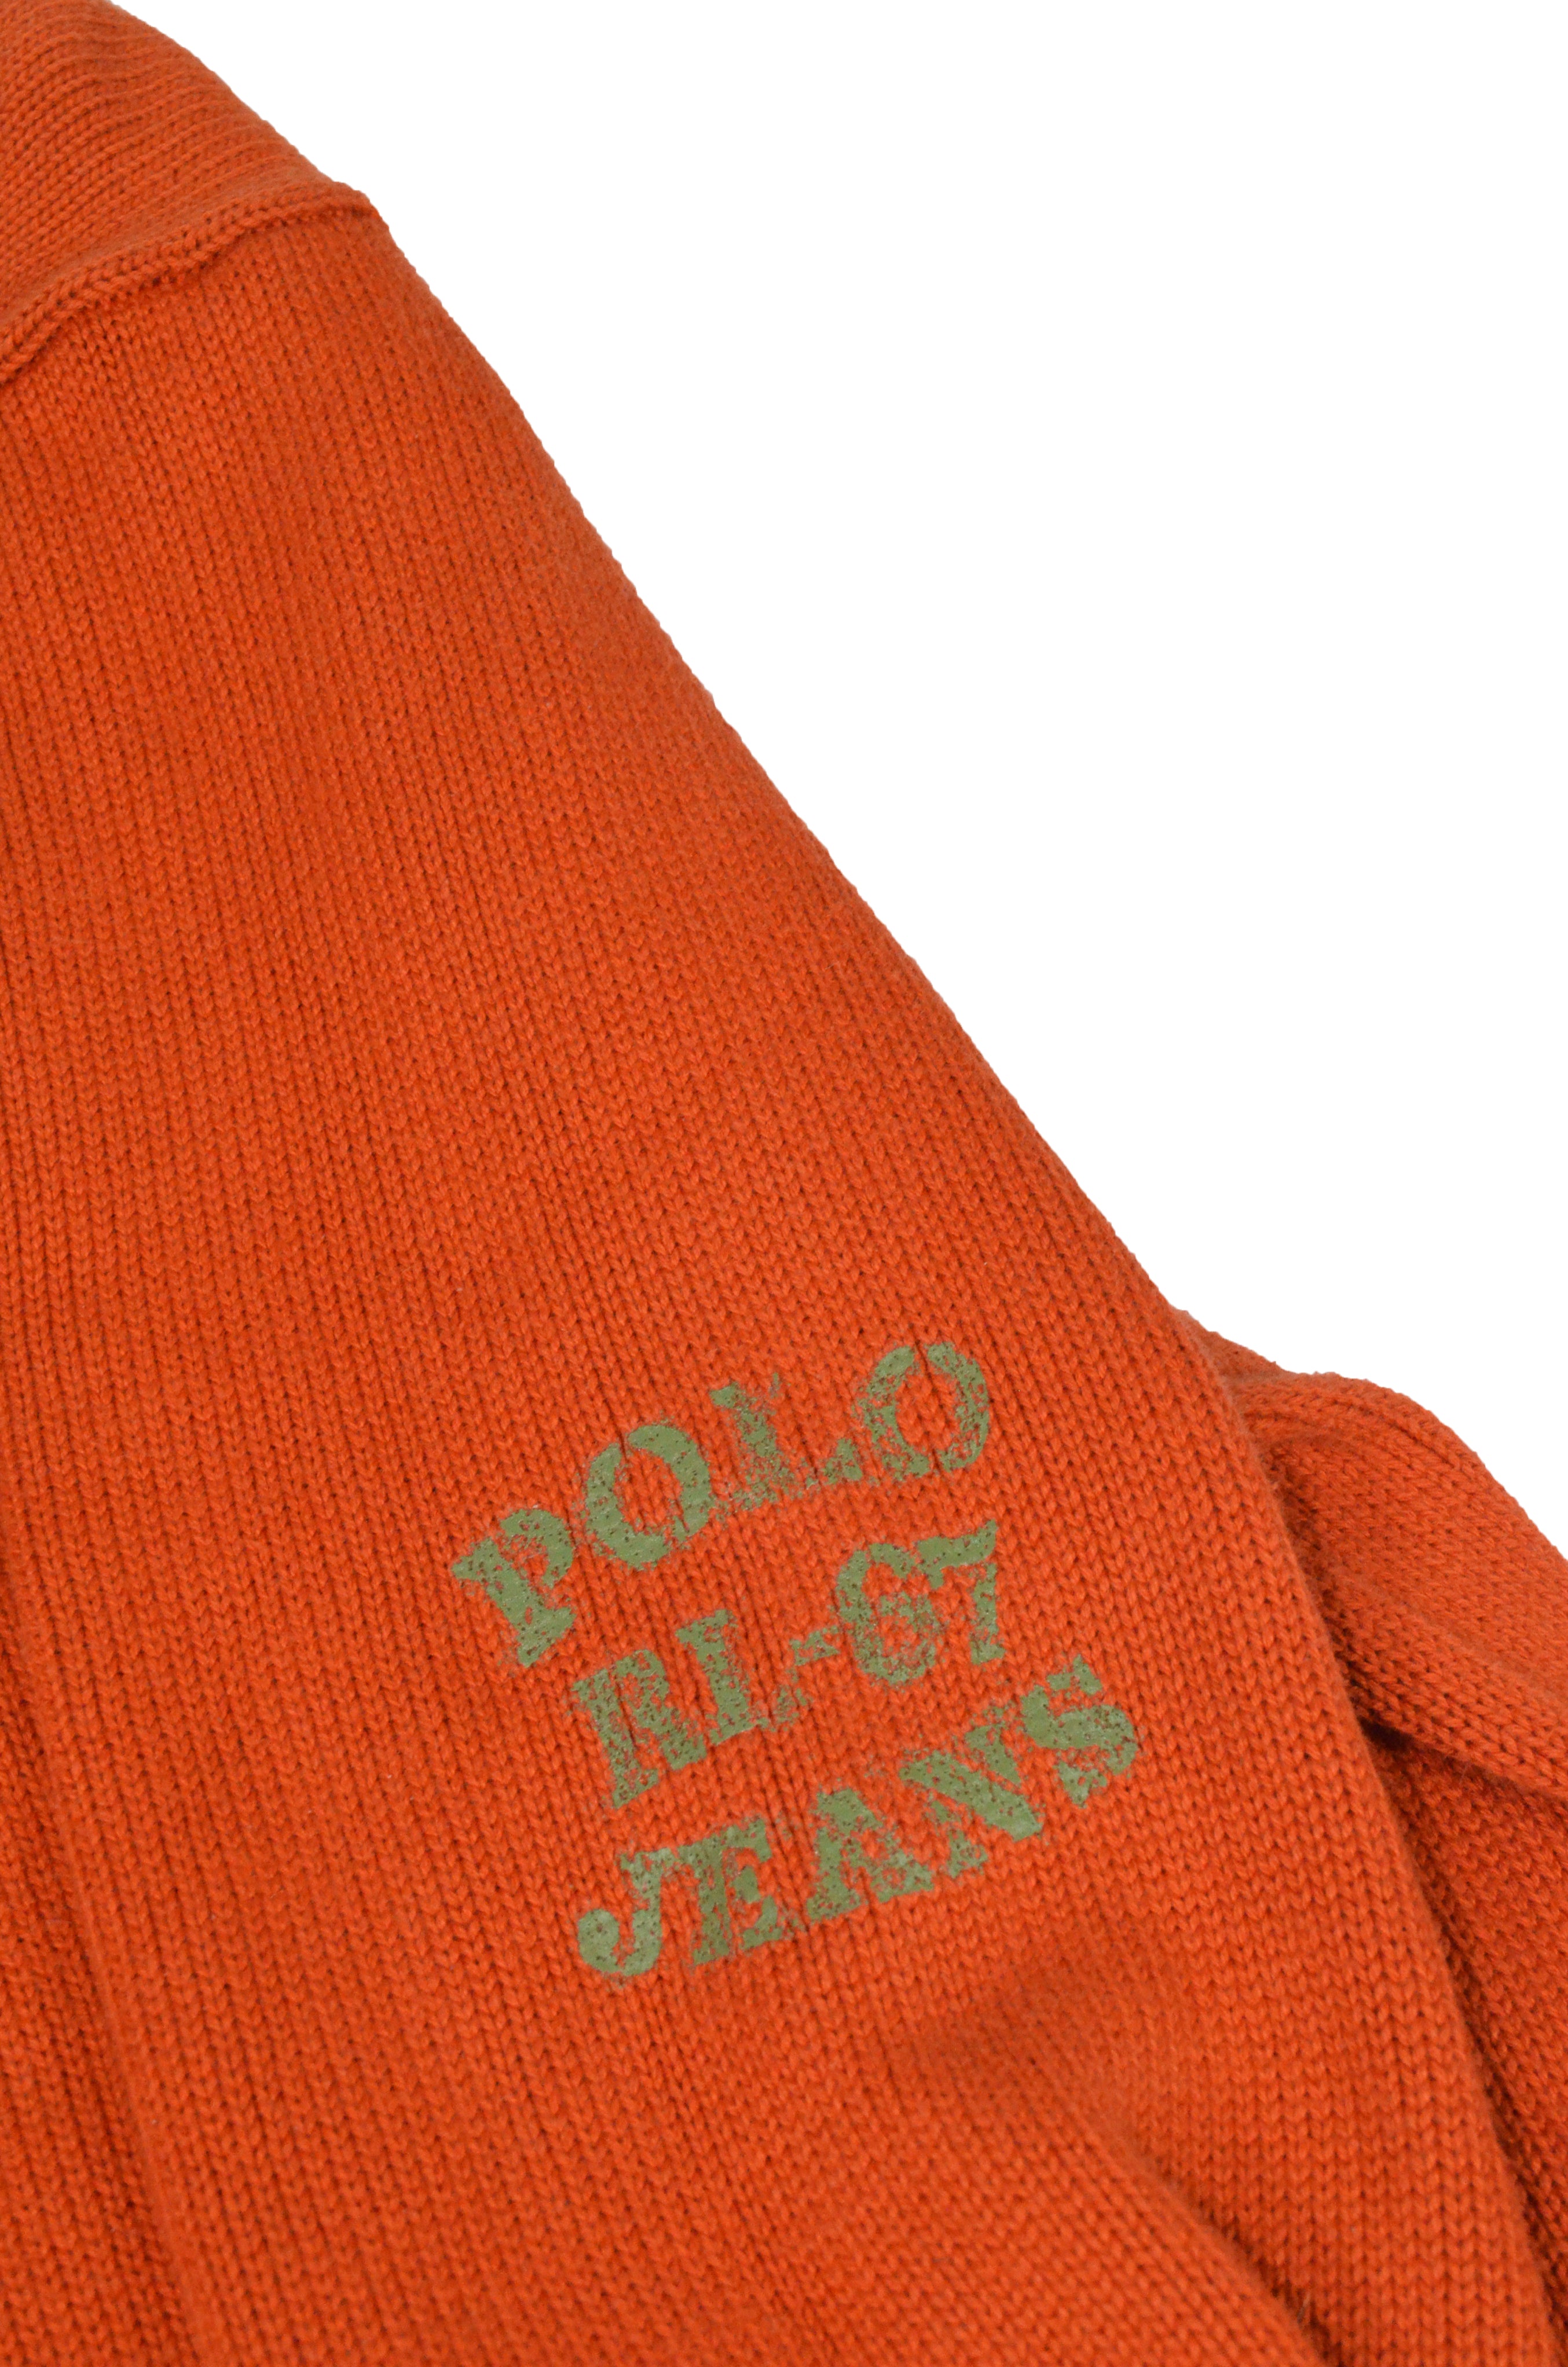 Polo Jeans Ralph Lauren Orange Zip Up Knit